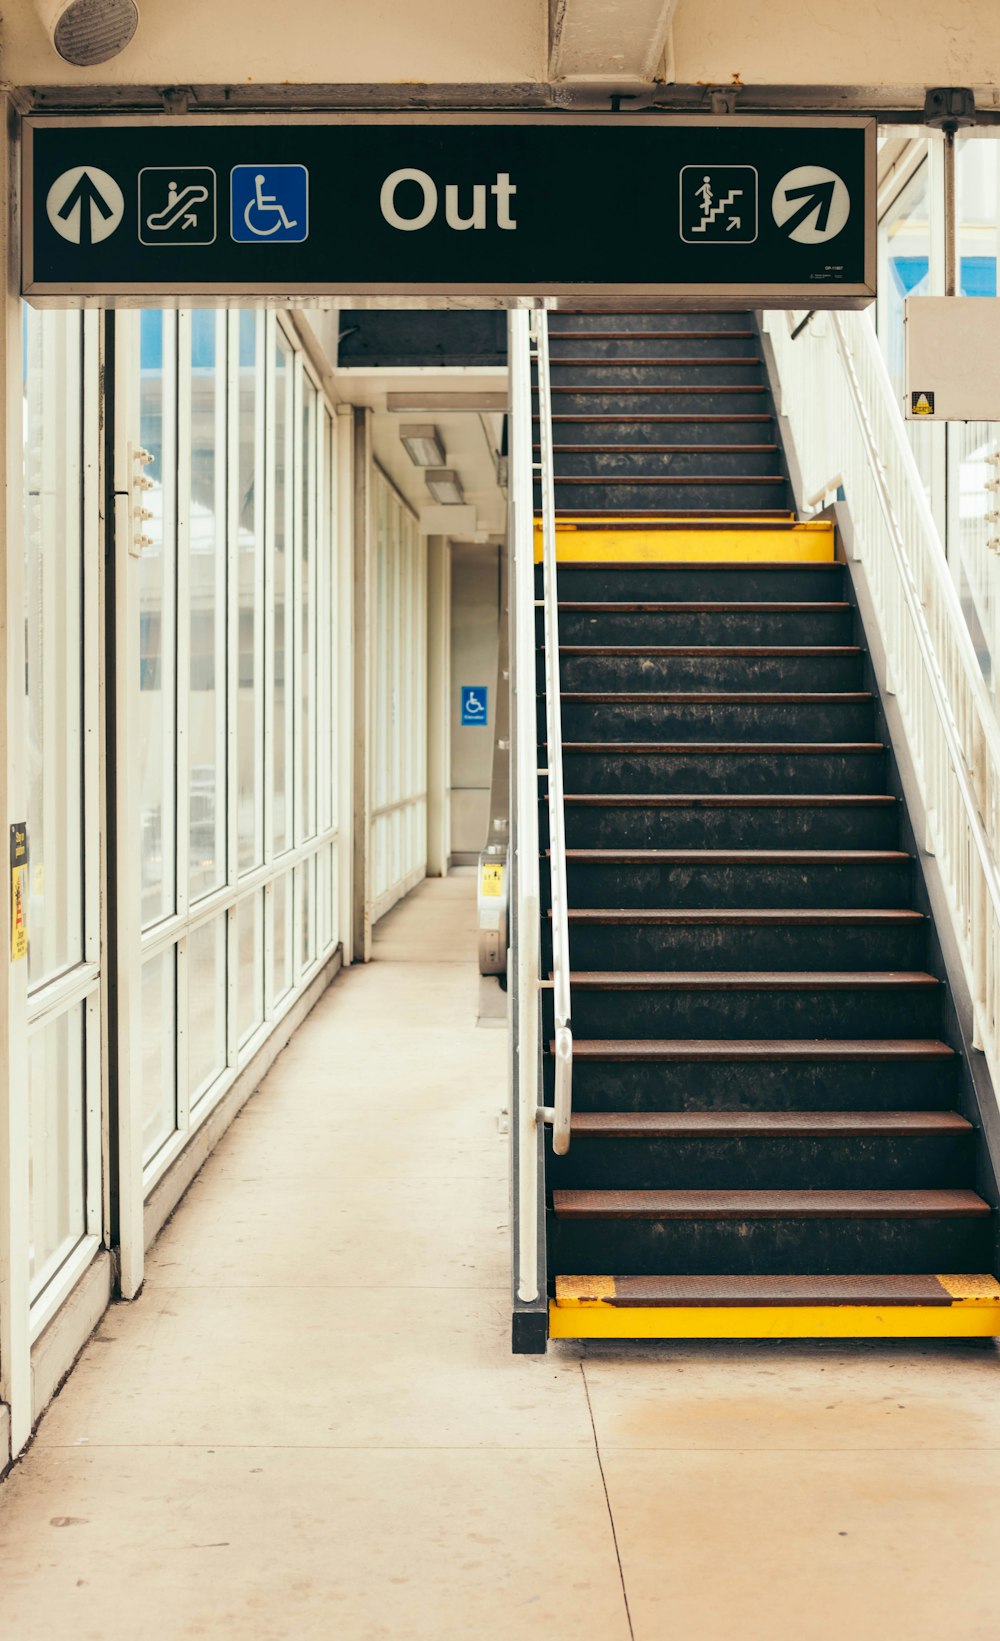 turned-off escalator